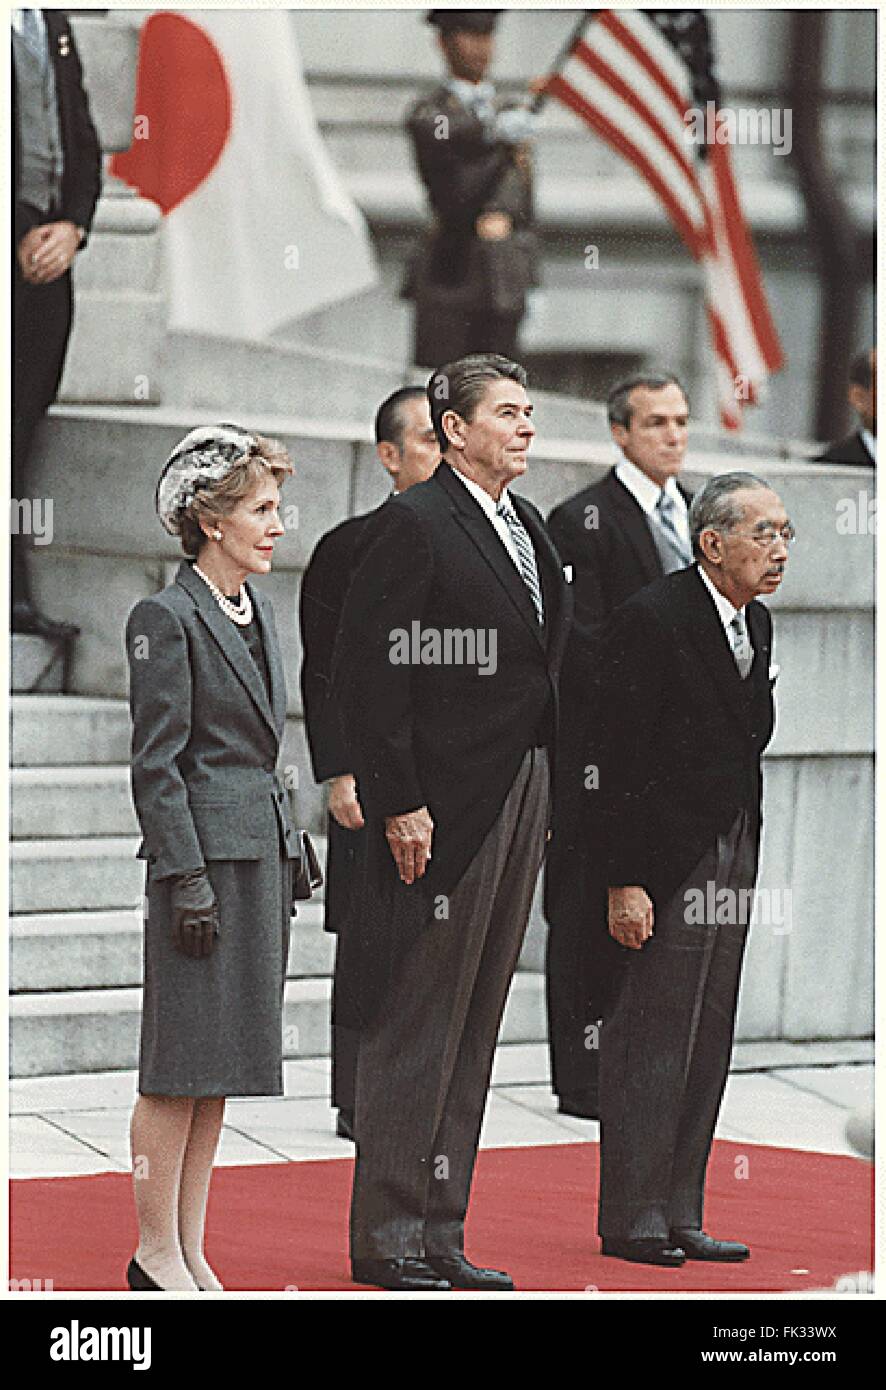 November 9, 1983 - Tokyo, Japan - U.S. President Ronald Reagan and First Lady Nancy Reagan and Japanese Emperor Hirohito in Tokyo, Japan on November 9, 1983..Credit: White House via CNP (Credit Image: © White House/CNP via ZUMA Wire) Stock Photo